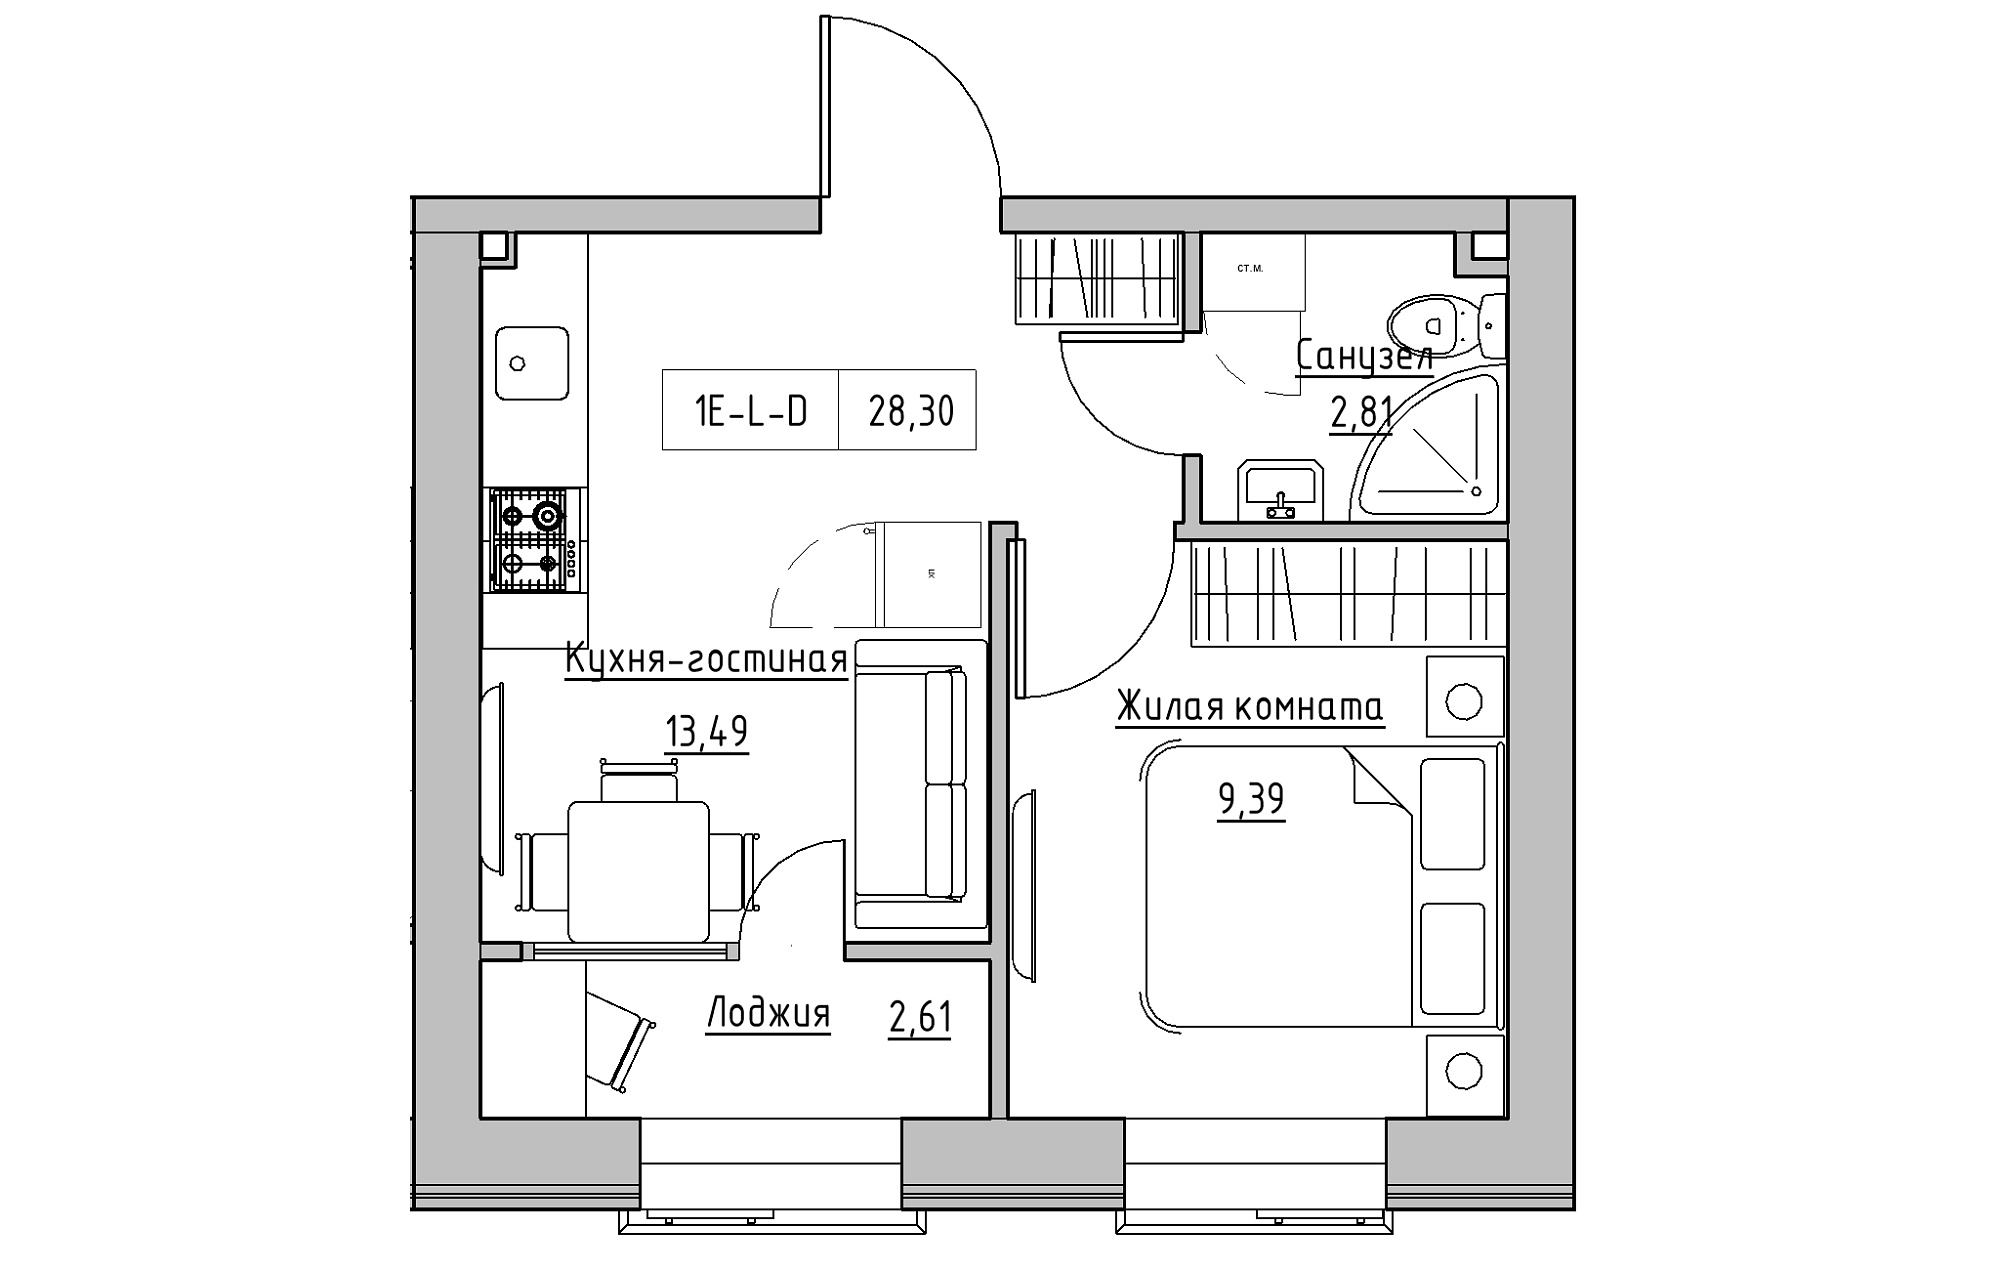 Planning 1-rm flats area 28.3m2, KS-018-01/0001.